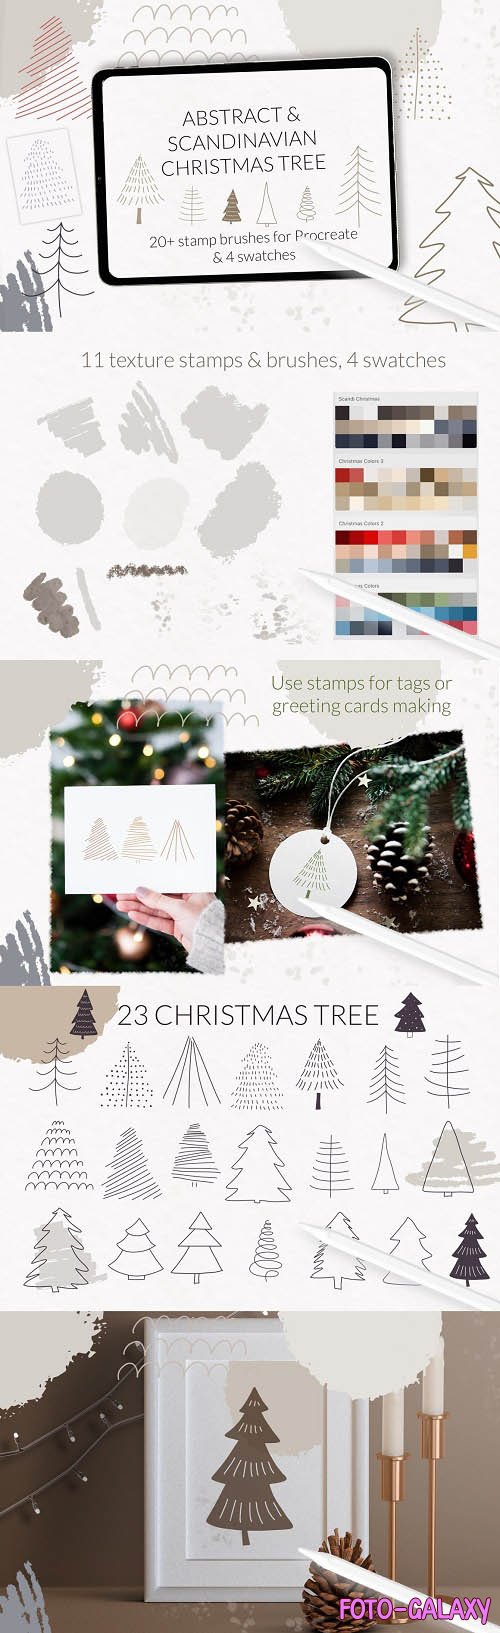 Scandinavian abstract Christmas tree - 6620627